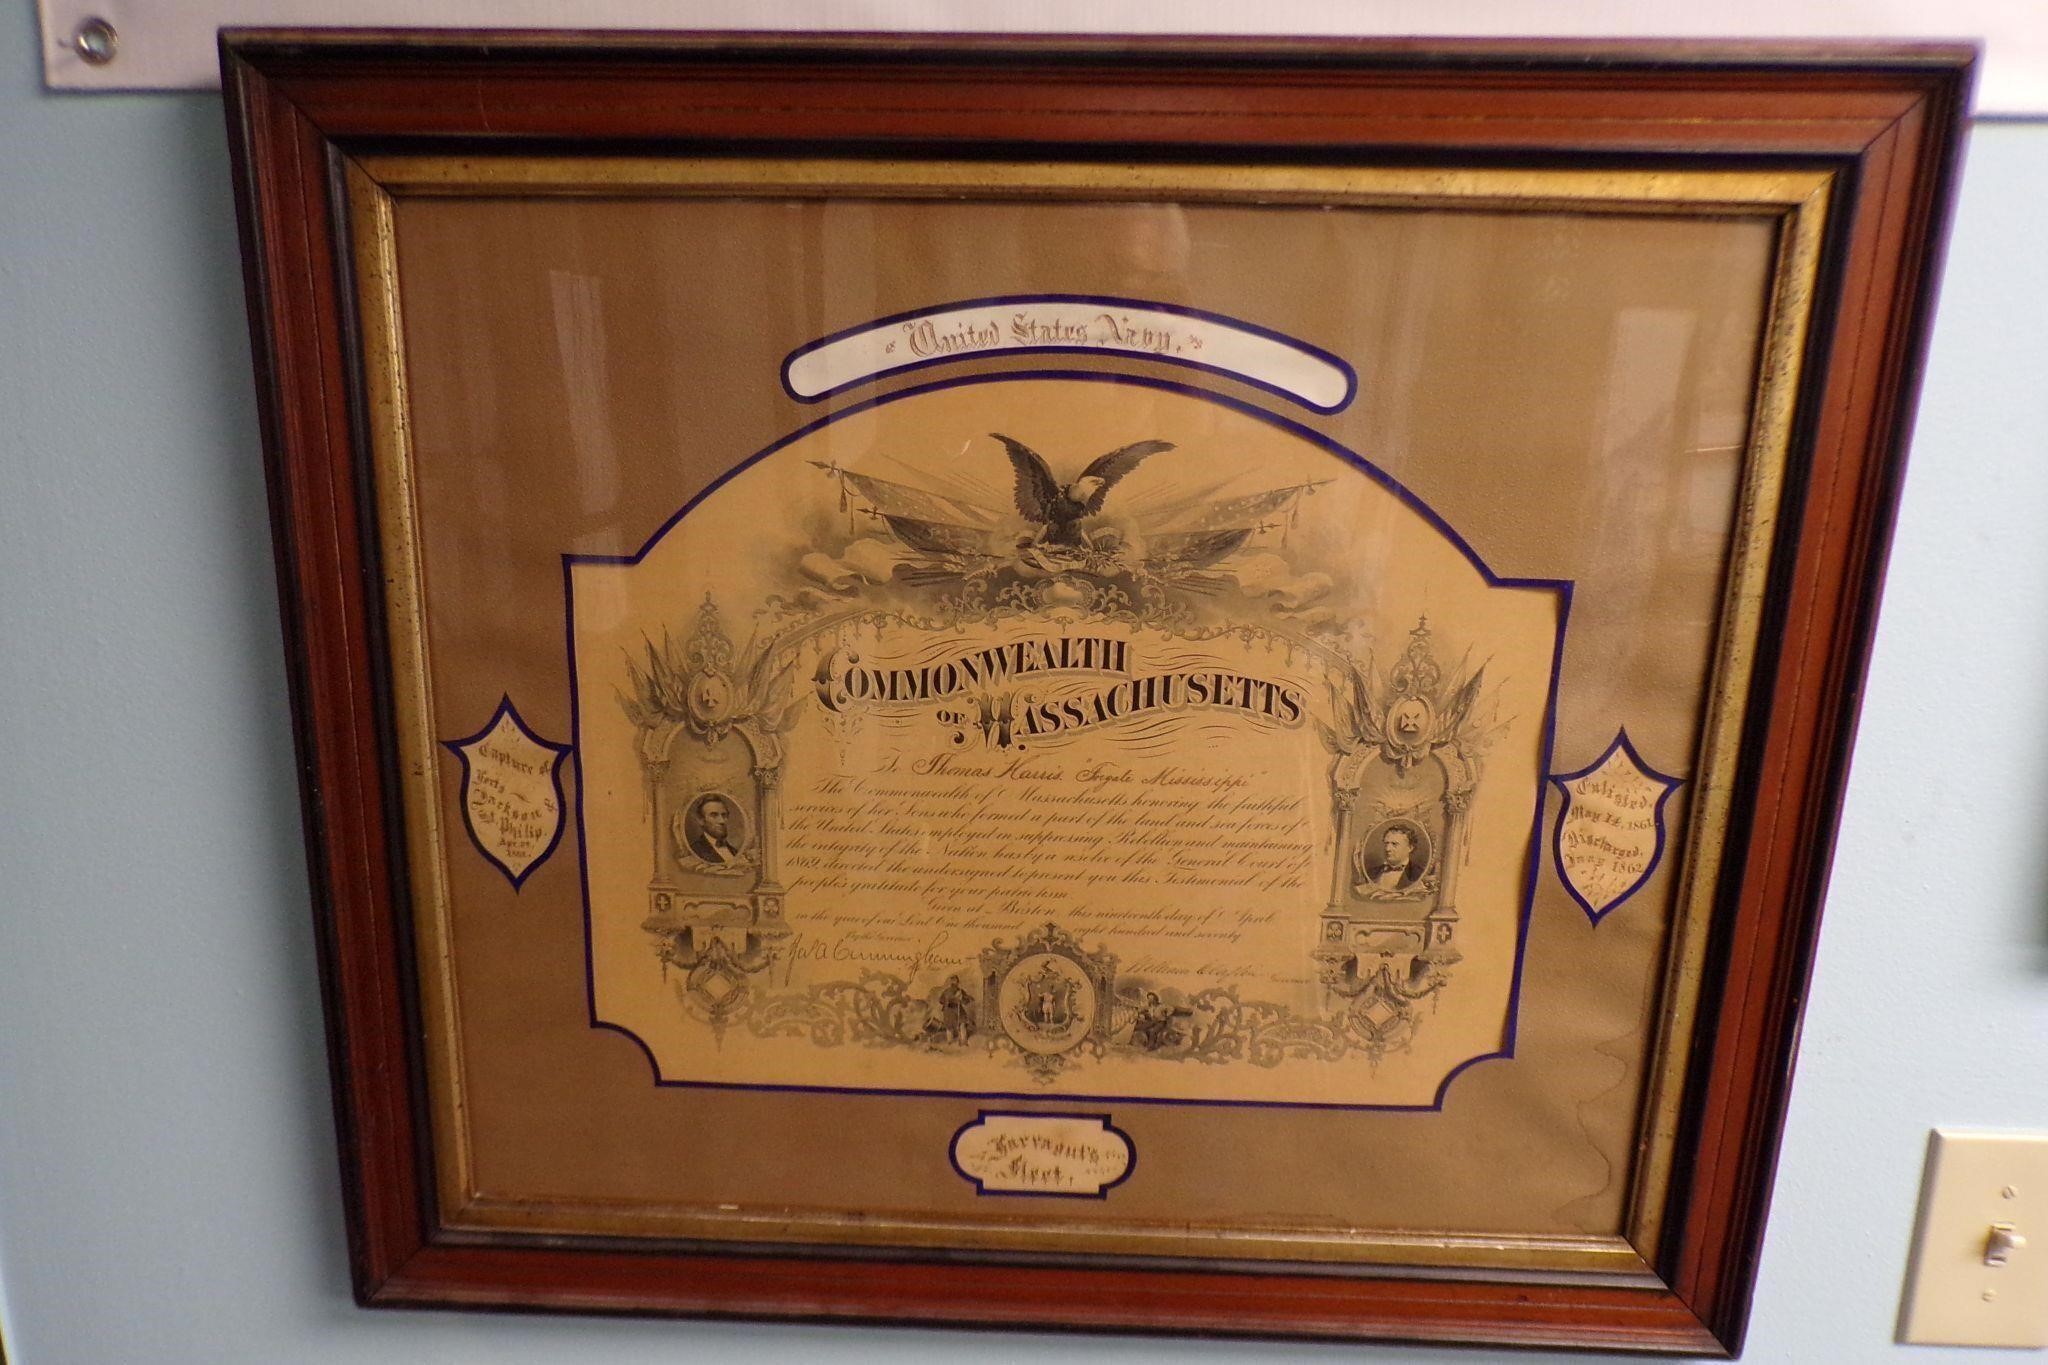 Rare Civil War Navy Certificate of Appreciation